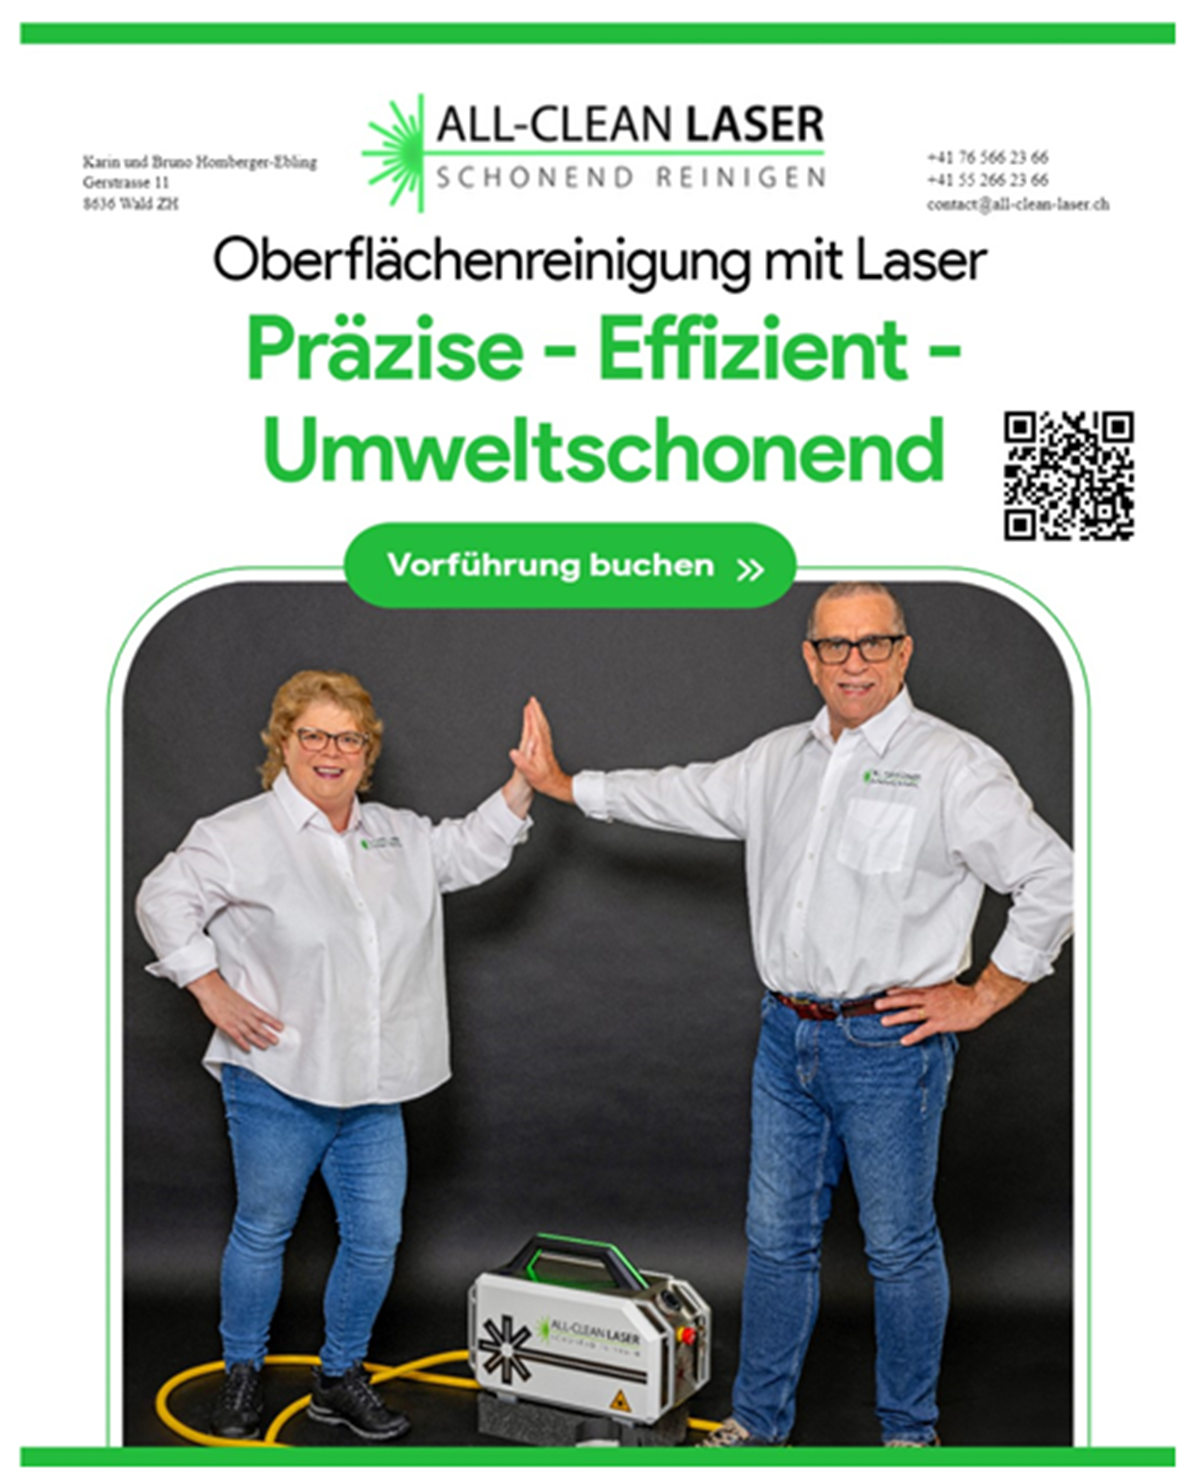 All-Clean Laser GmbH